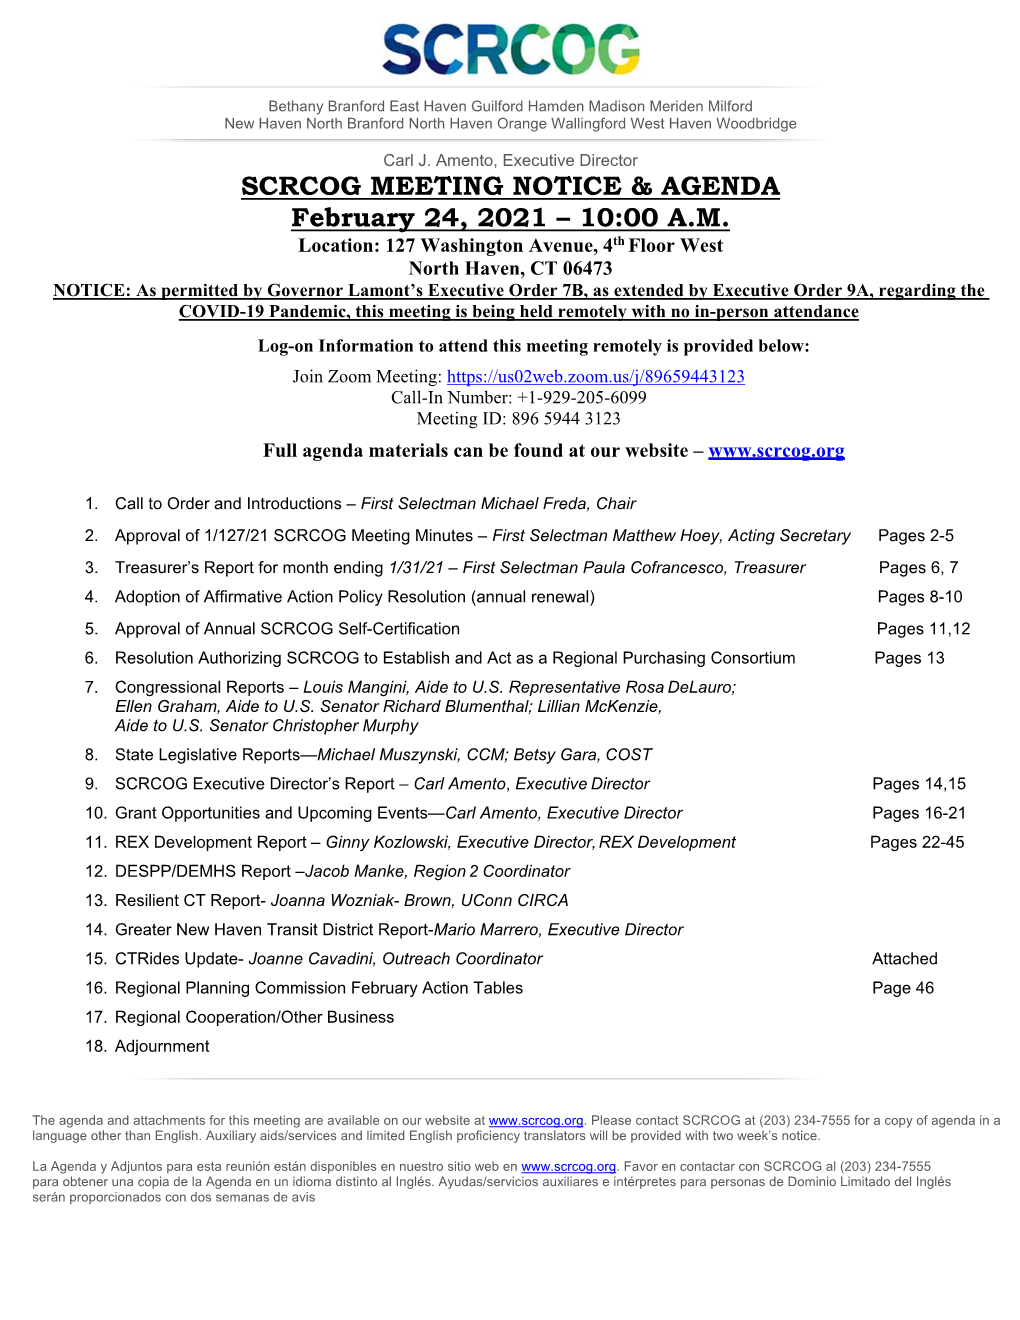 SCRCOG Board Agenda February 2021